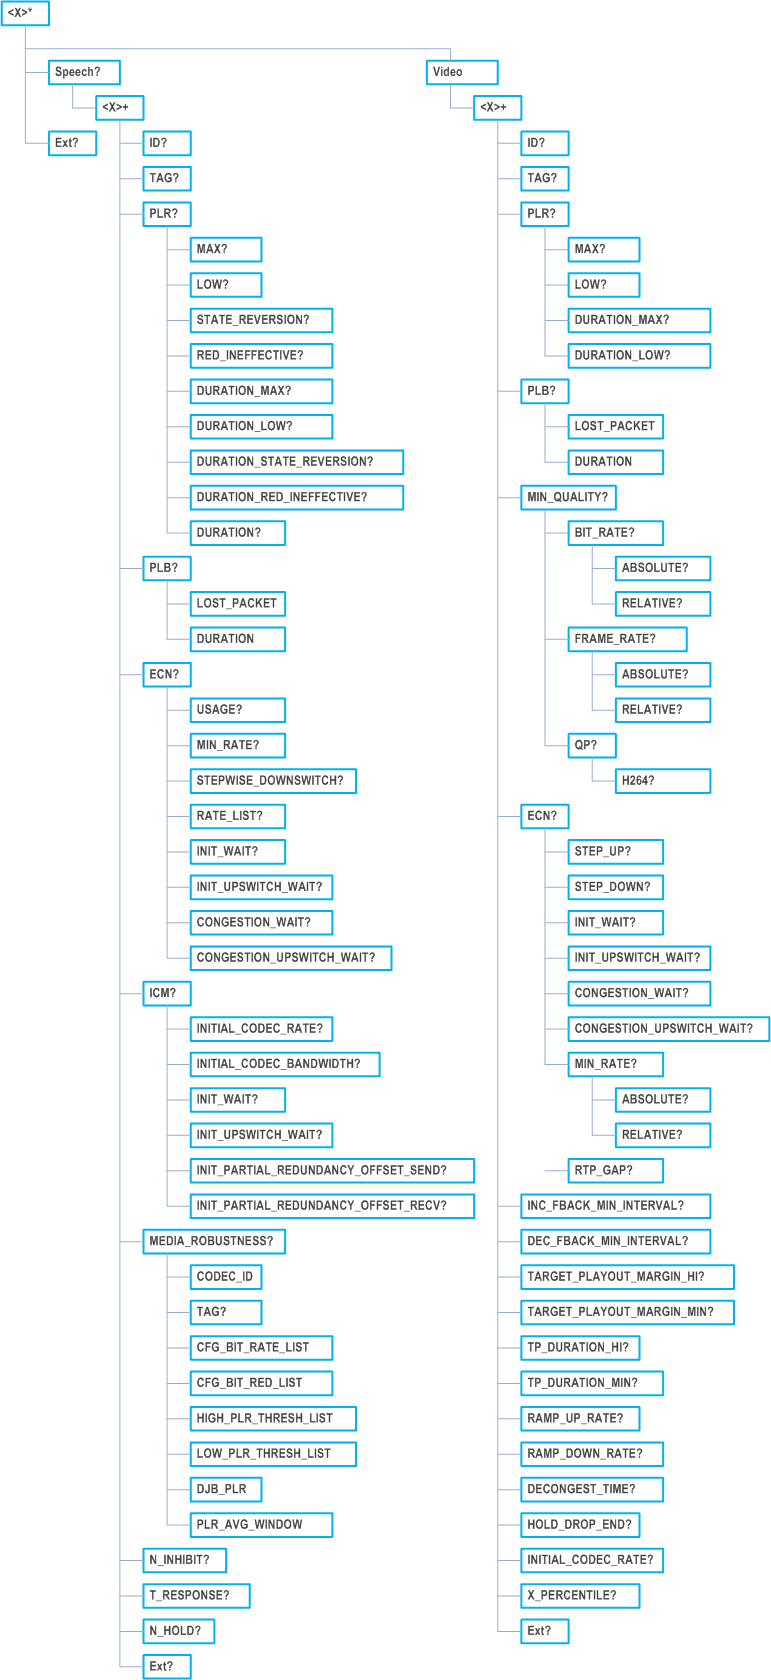 Copy of original 3GPP image for 3GPP TS 26.114, Fig. 17.1: MTSI media adaptation management object tree